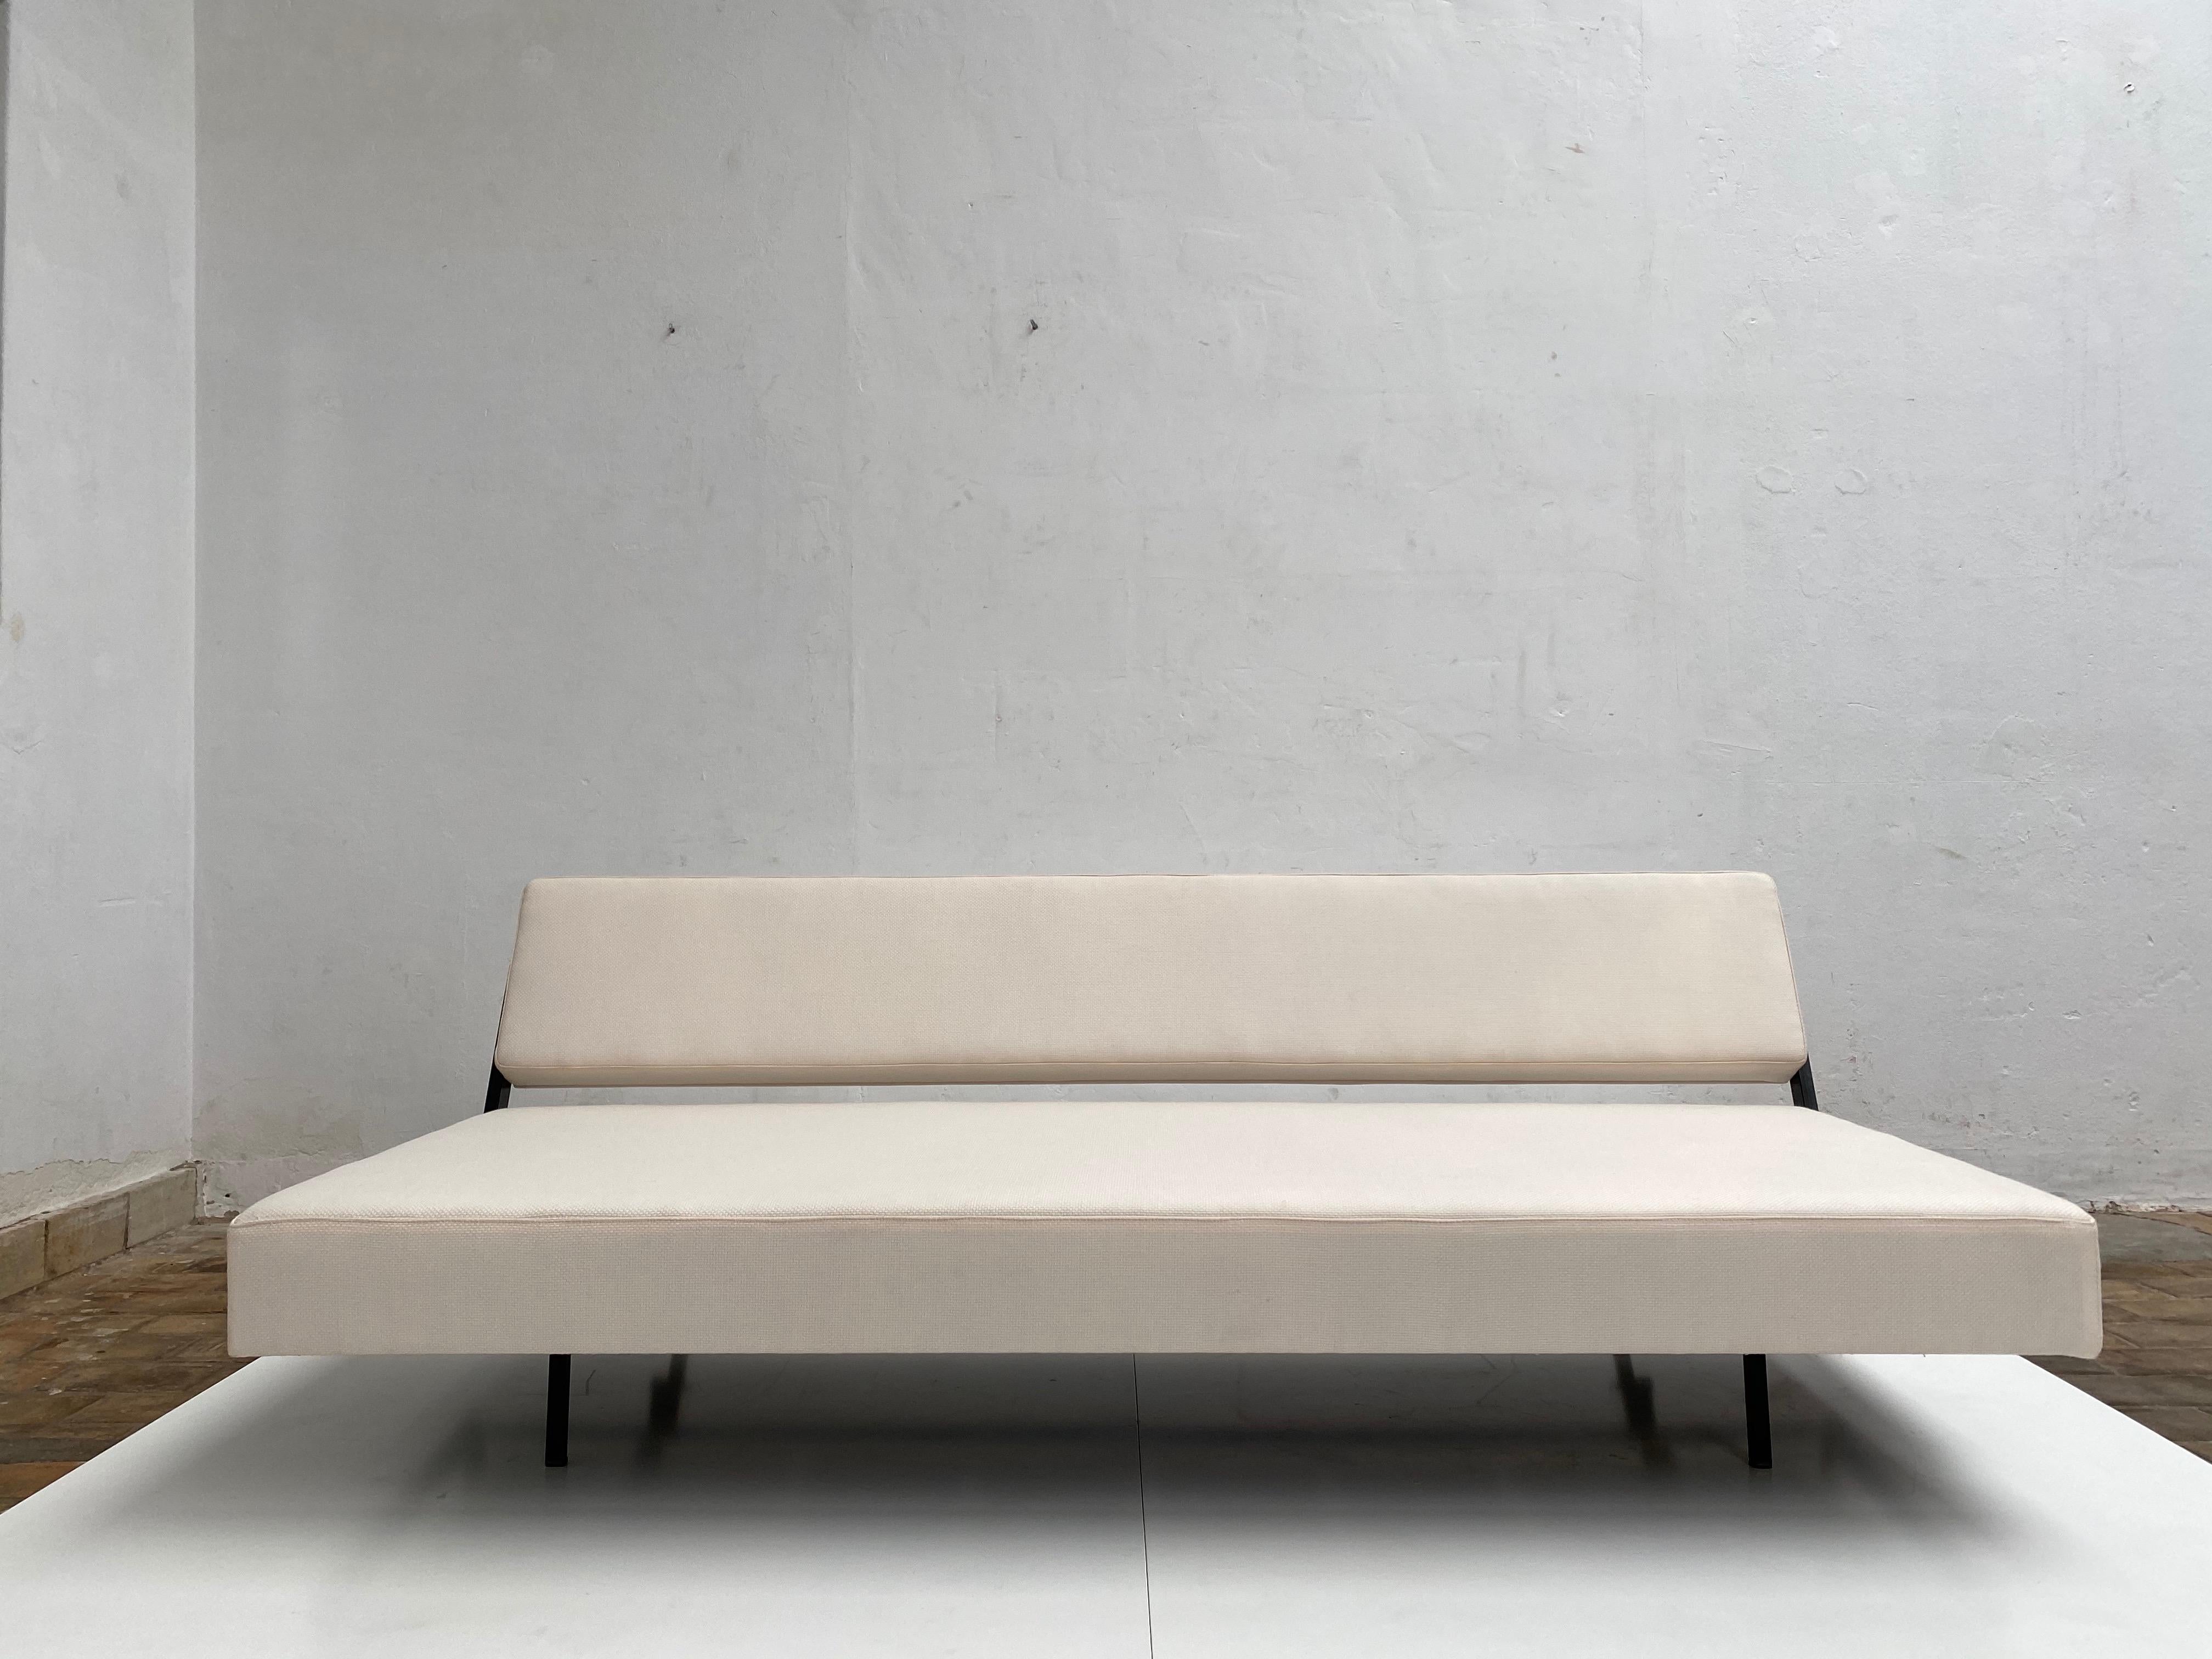 Space Saving Sleeping Sofa Minimal Design 1950er Jahre, Auping, Niederlande (Stahl) im Angebot